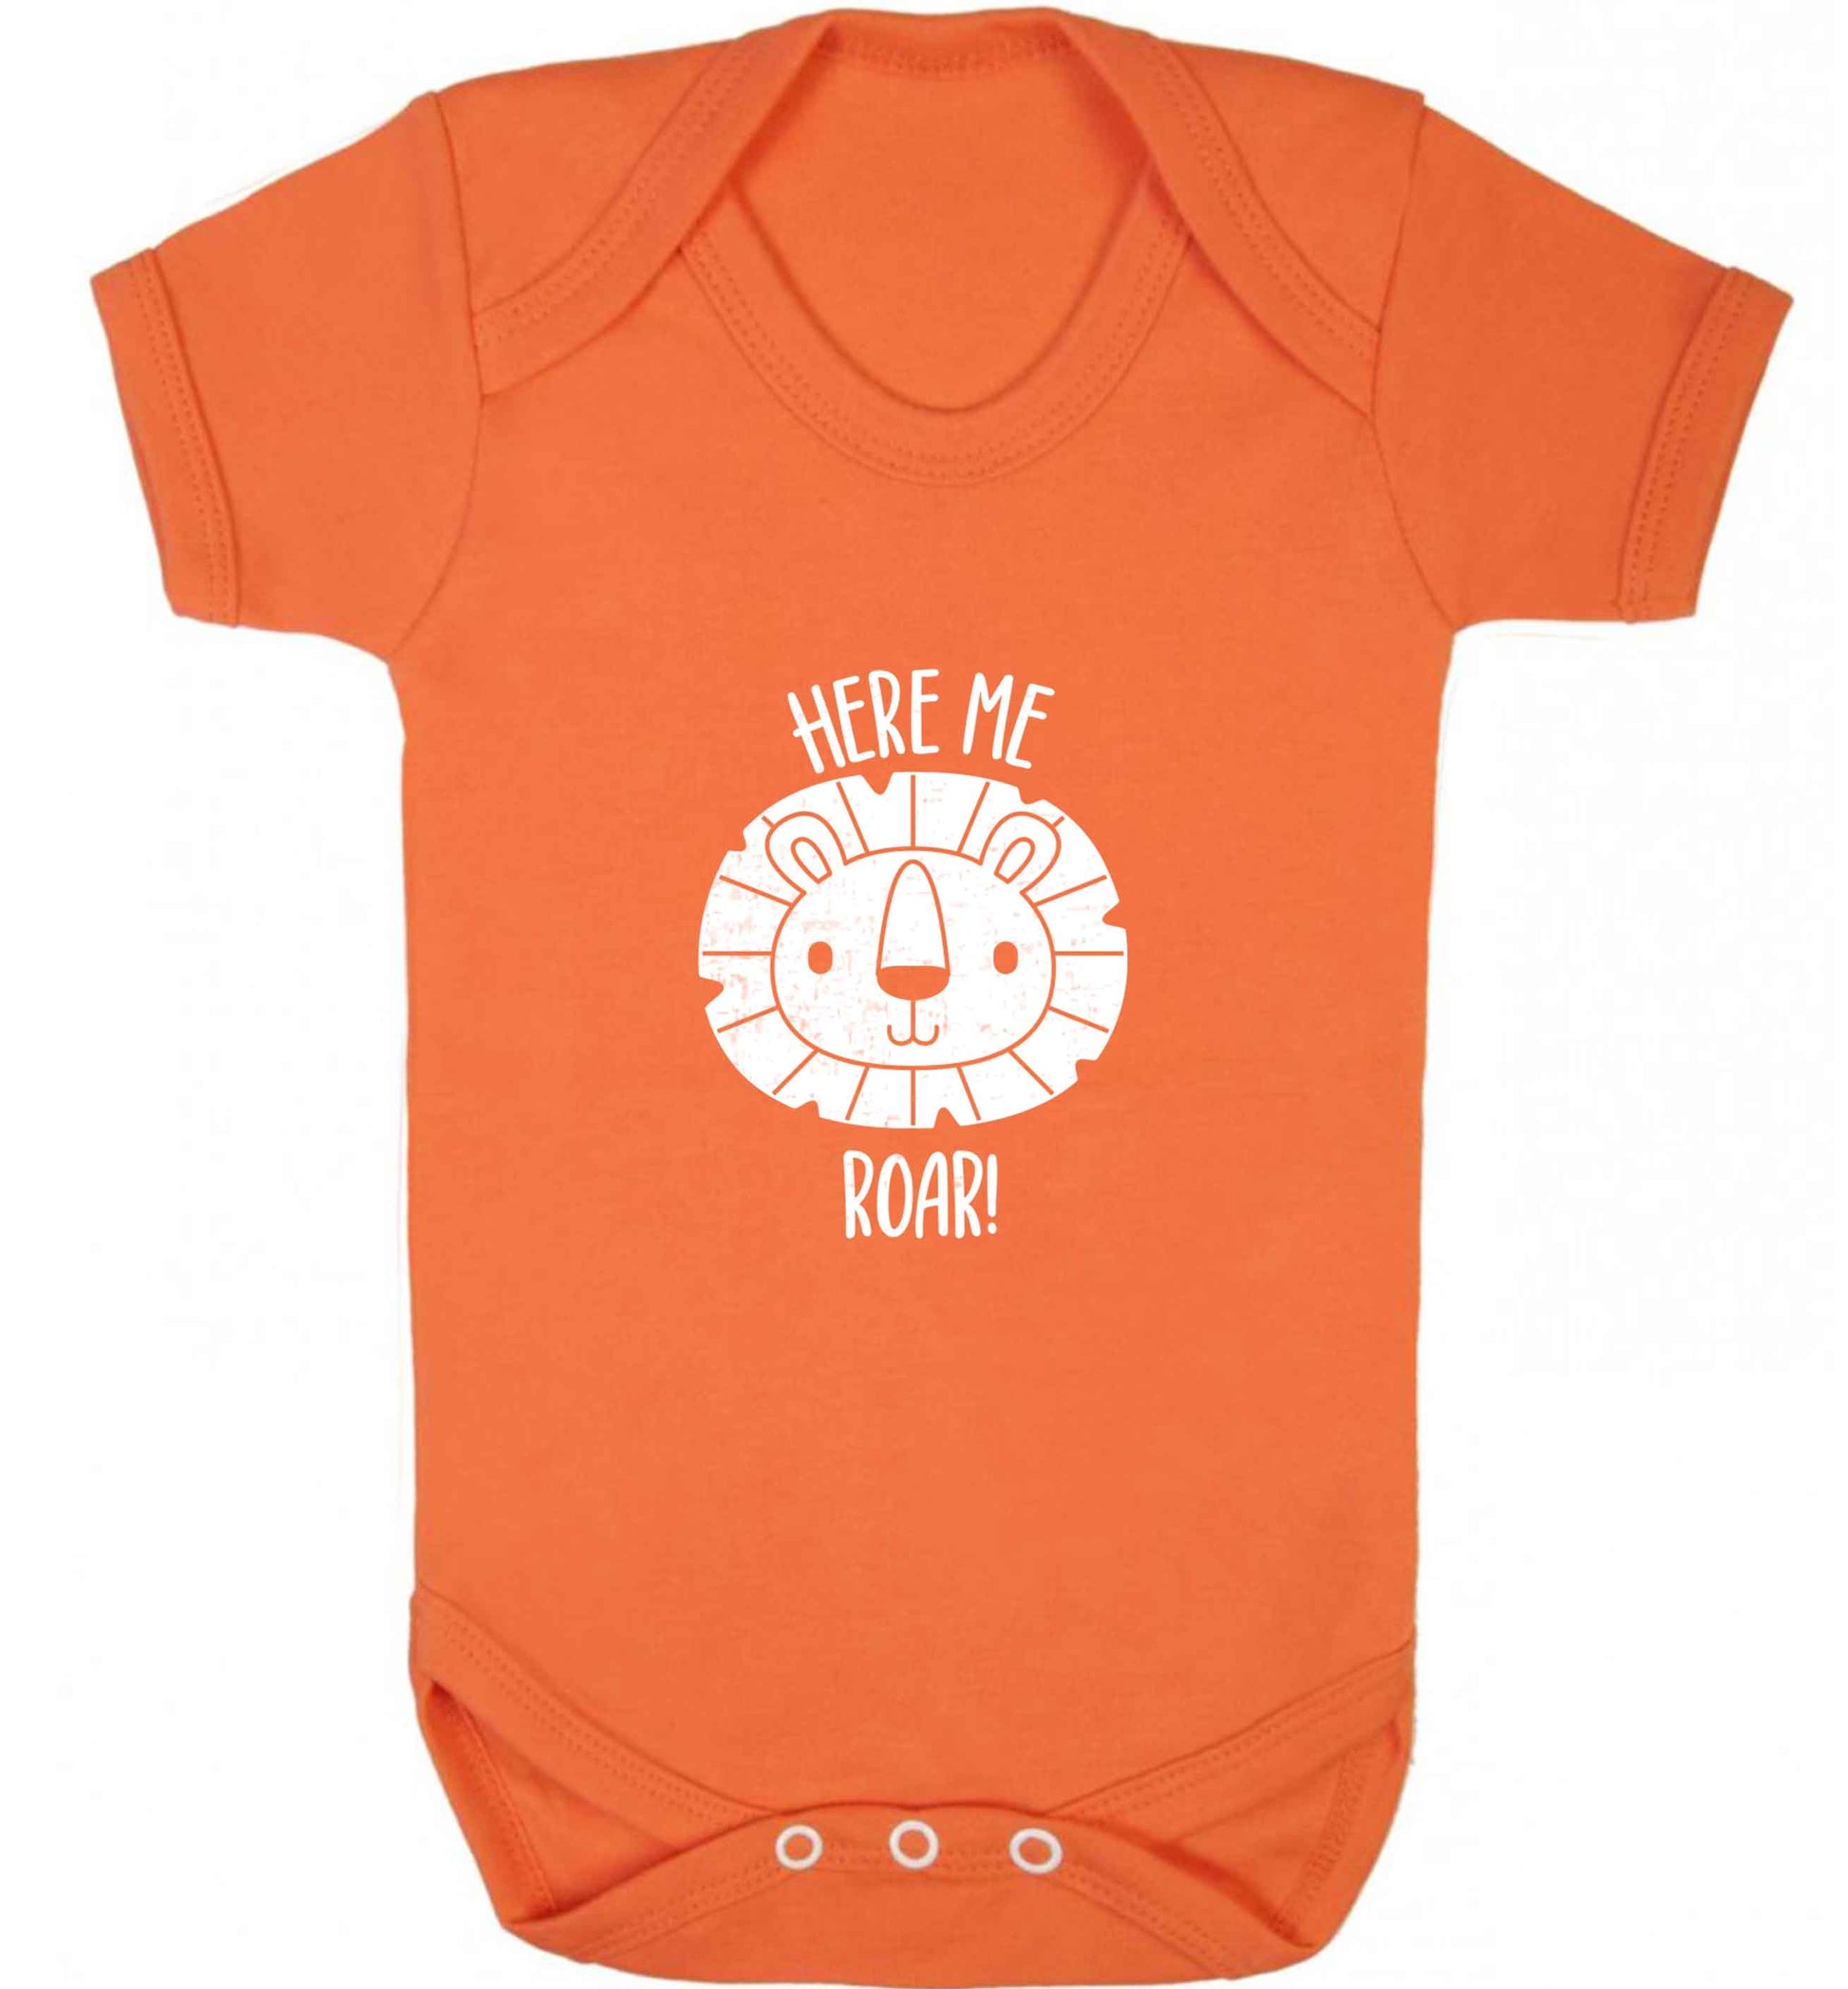 Hear me roar baby vest orange 18-24 months